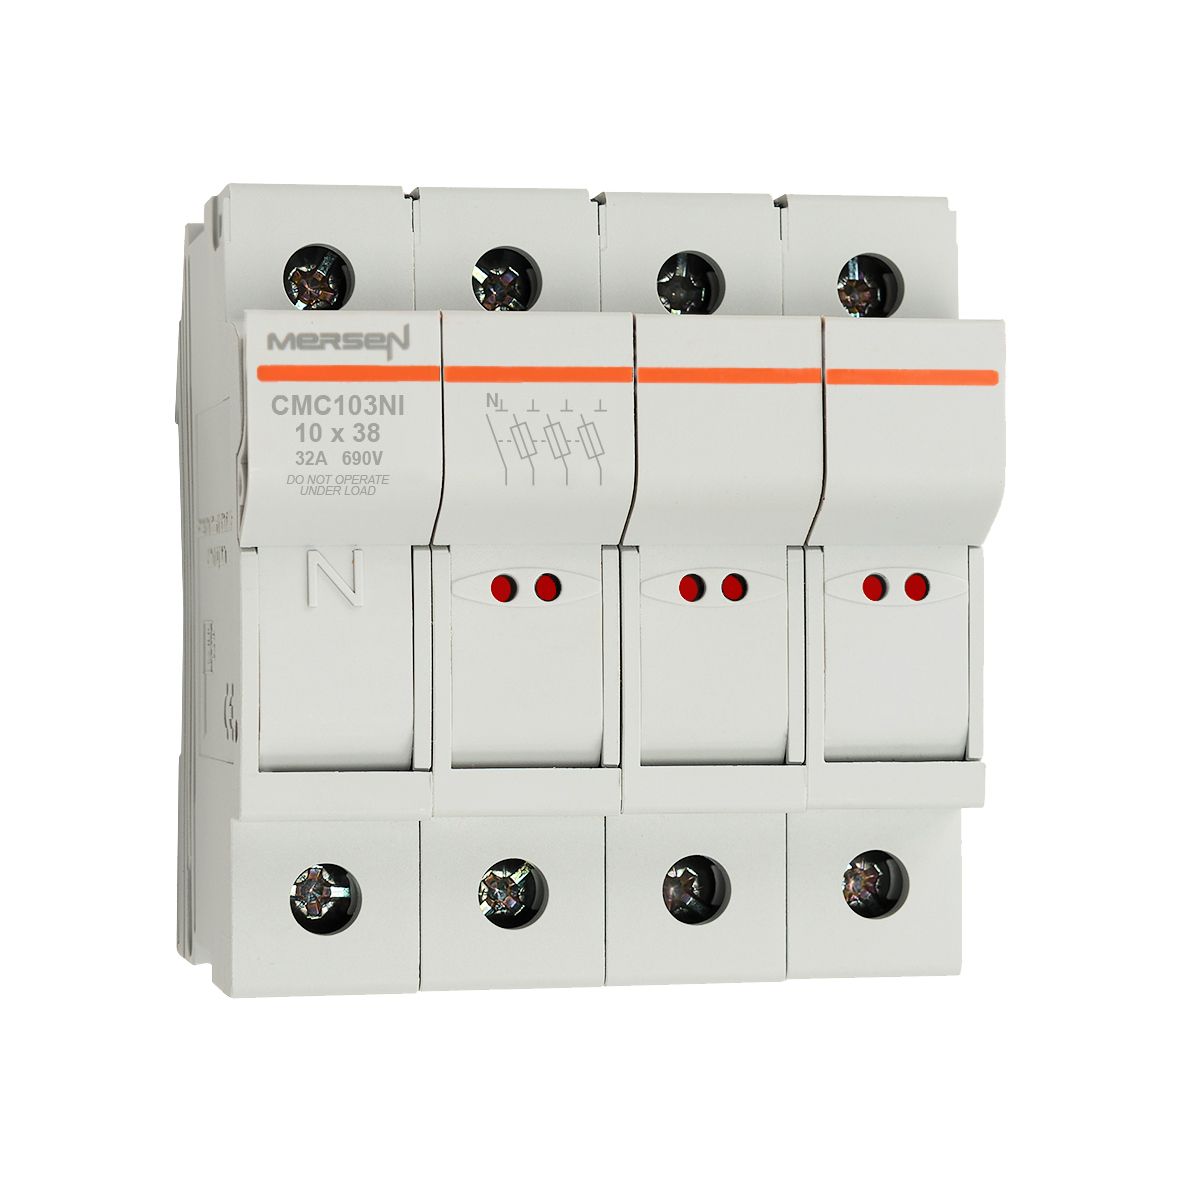 A1062692 - CMC10 modular fuse holder,IEC, 3P+N,indicator light,10x38,DIN rail mounting,IP20